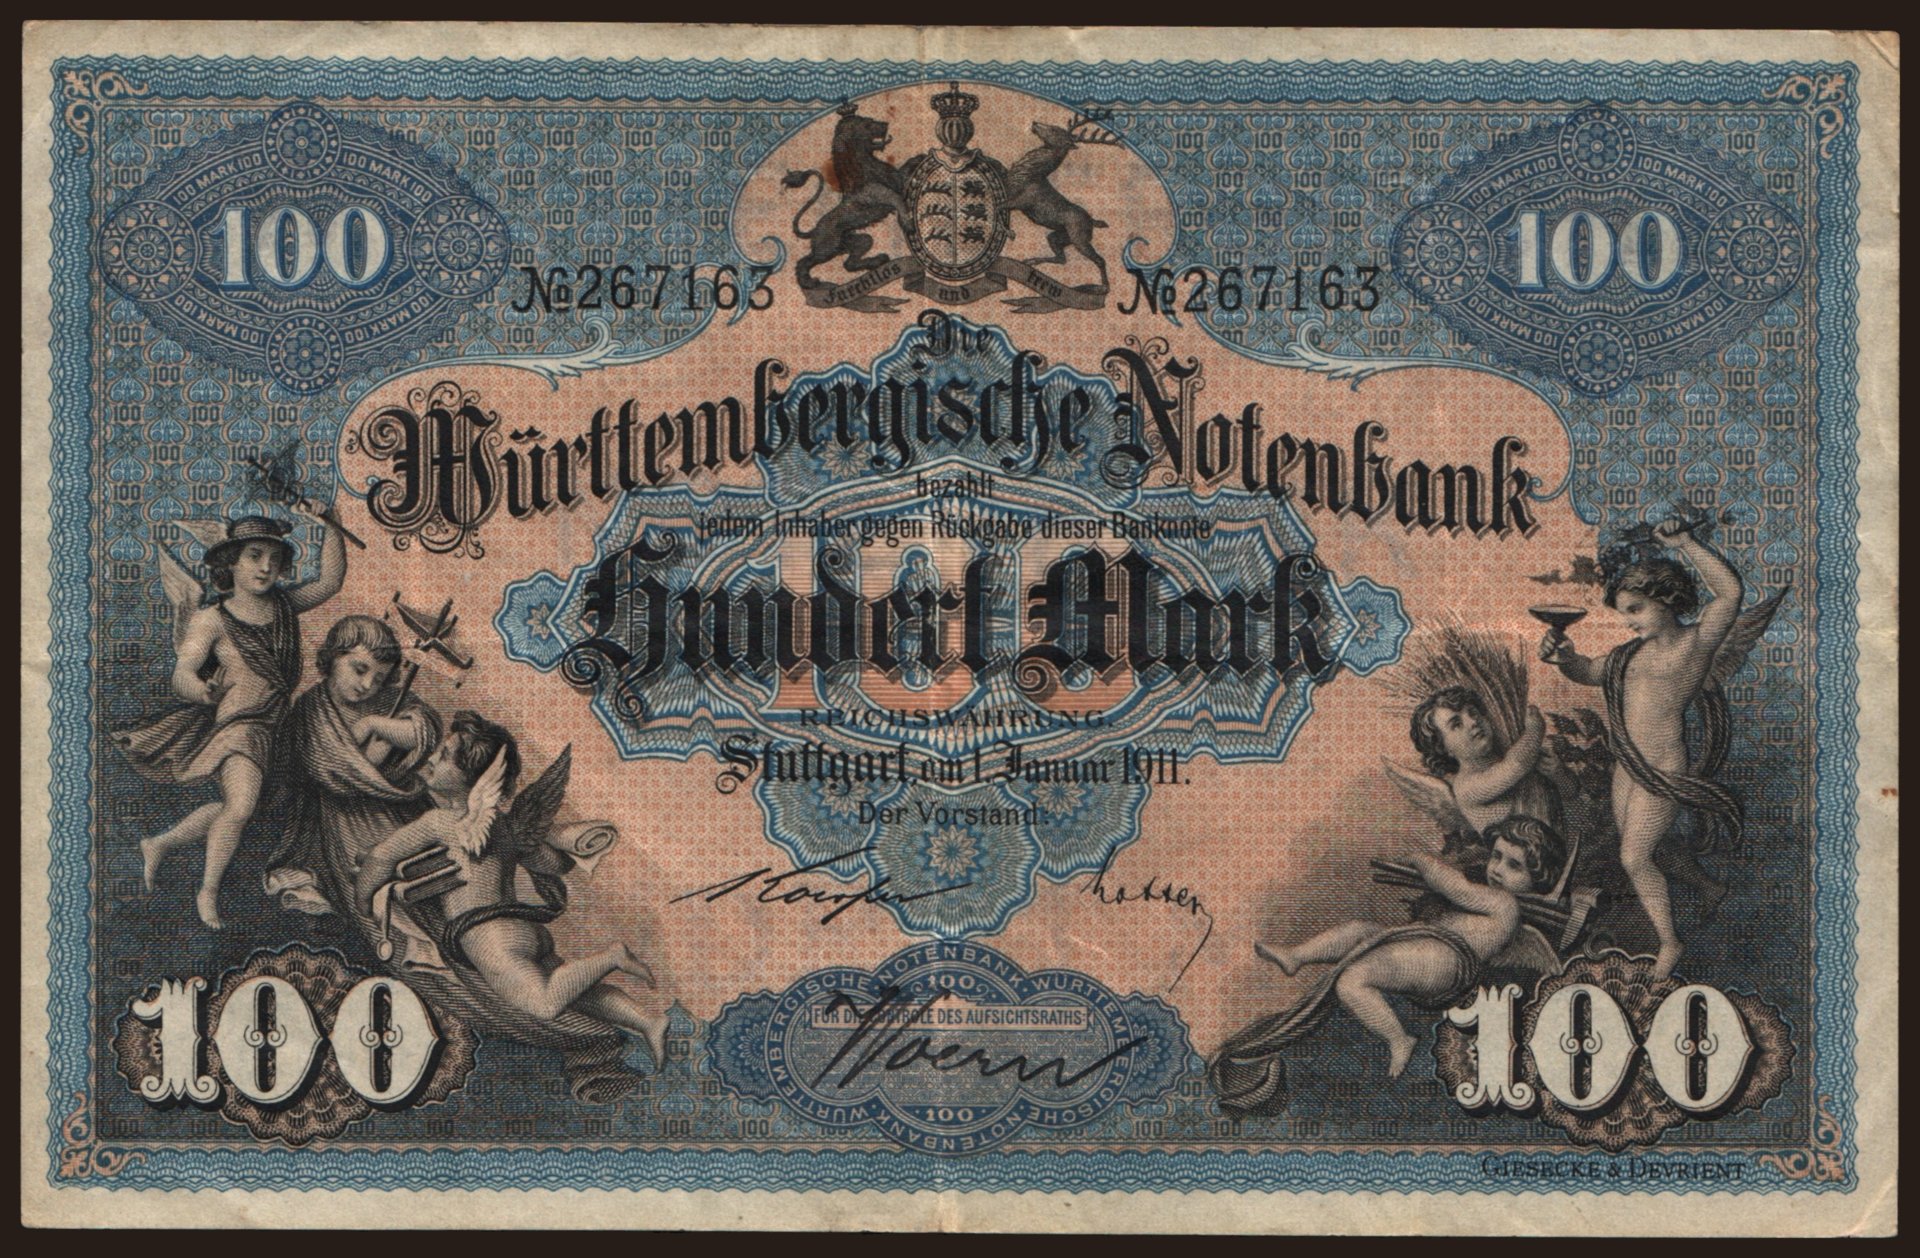 Württembergische Notenbank, 100 Mark, 1911